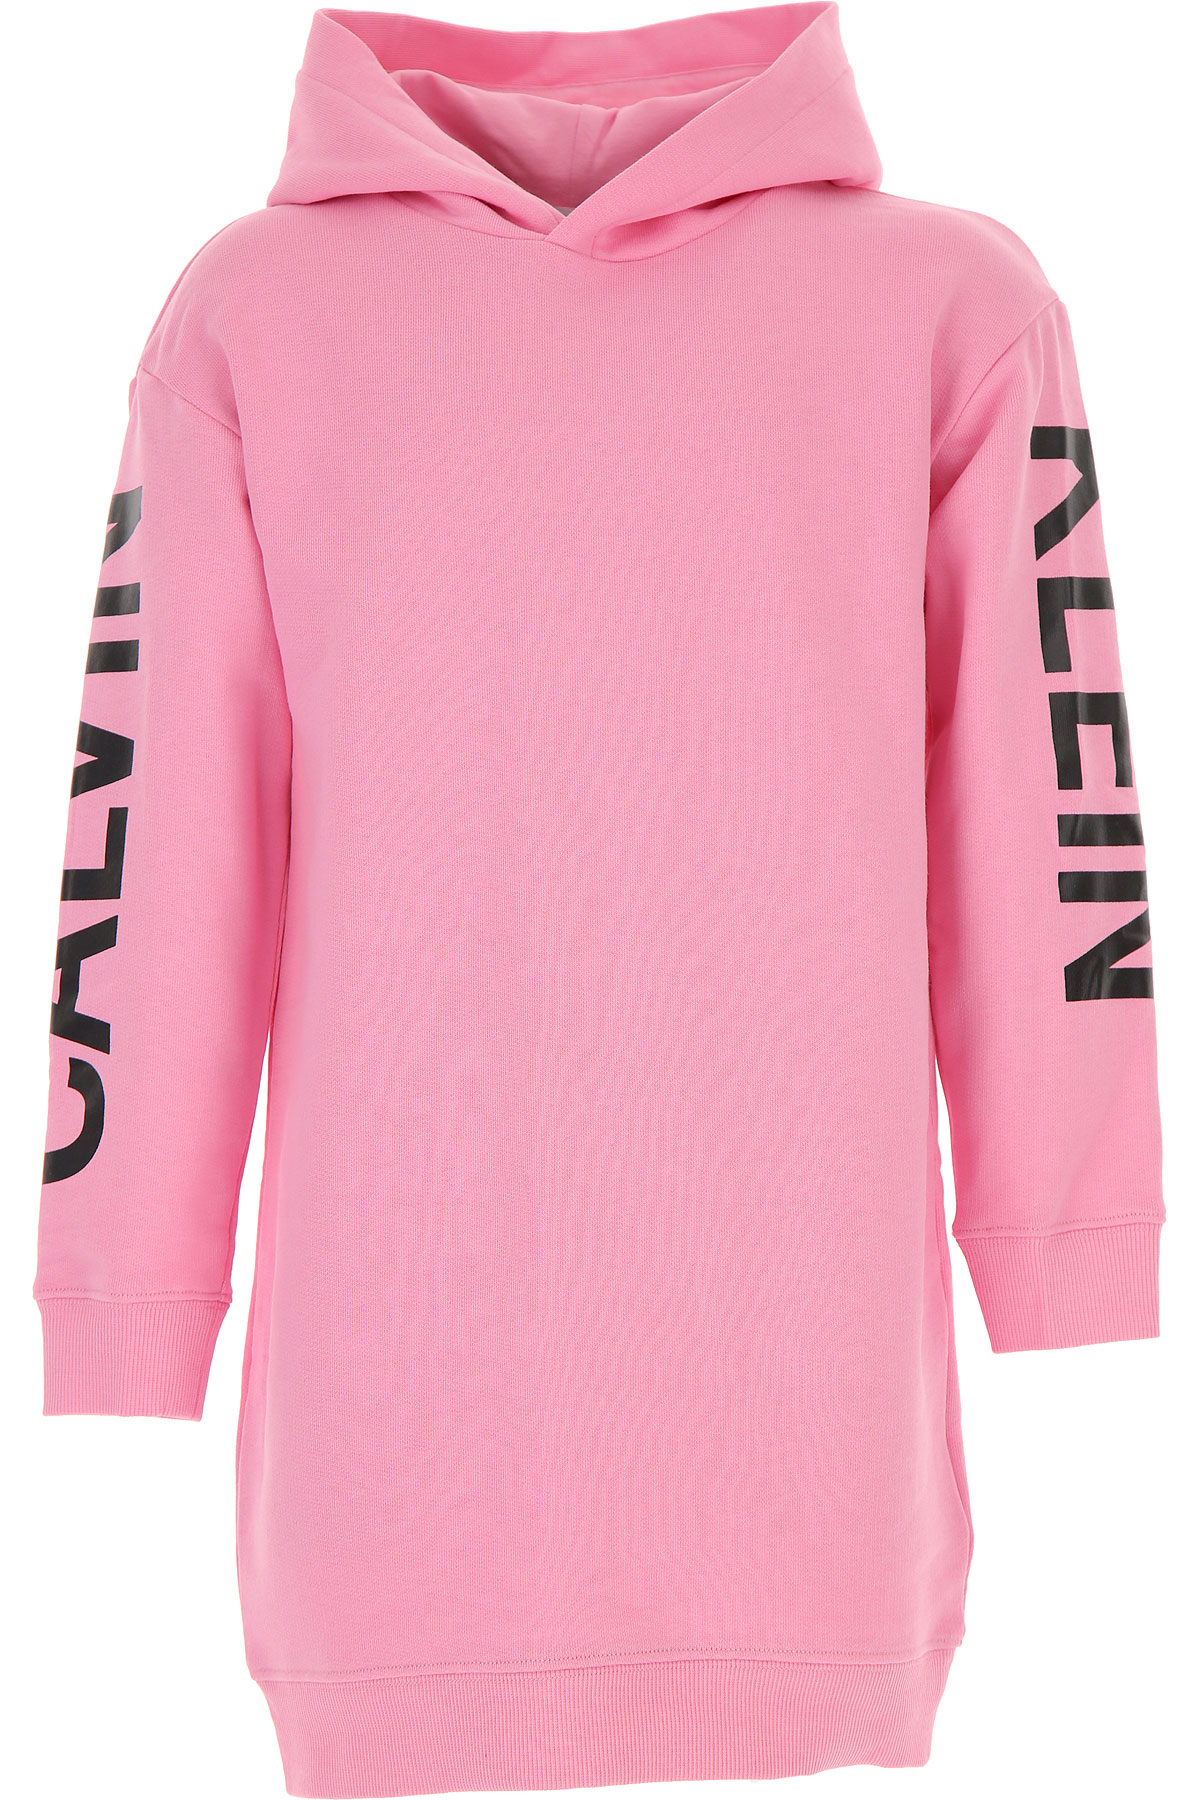 Calvin Klein Kleid für Mädchen Günstig im Sale, Pink, Baumwolle, 2017, 10Y 12Y 14Y 16Y 4Y 6Y 8Y